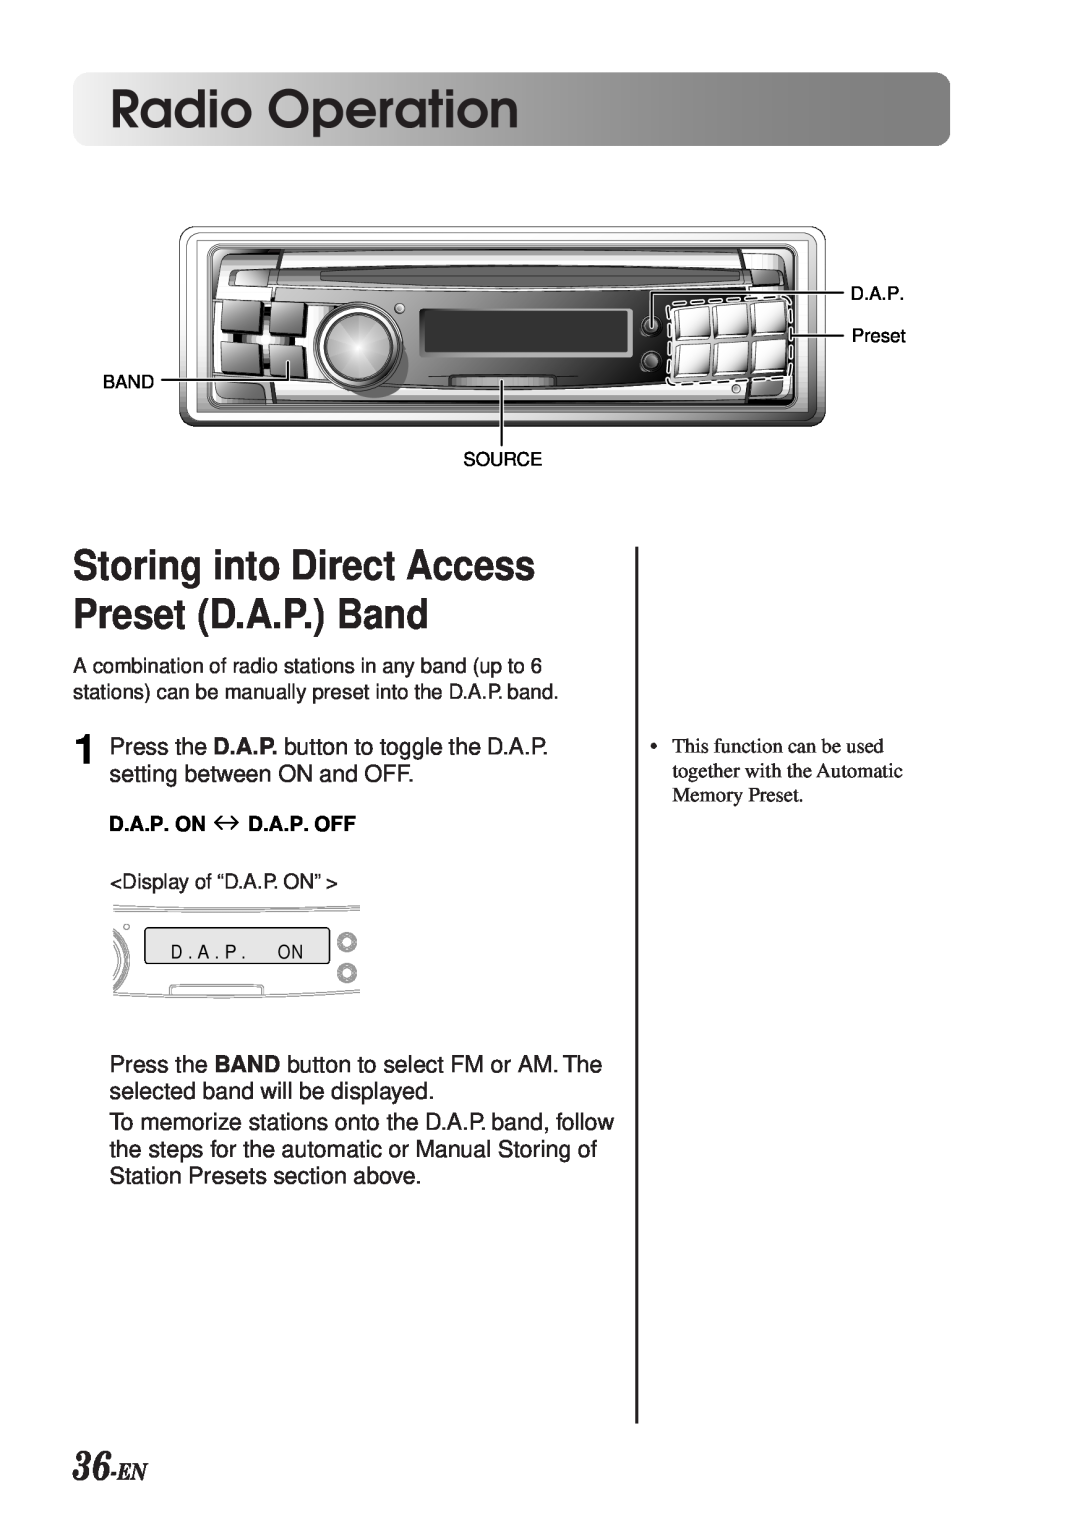 Alpine CDA-7990 manual 36-EN, Storing into Direct Access Preset D.A.P. Band, Radio Operation 